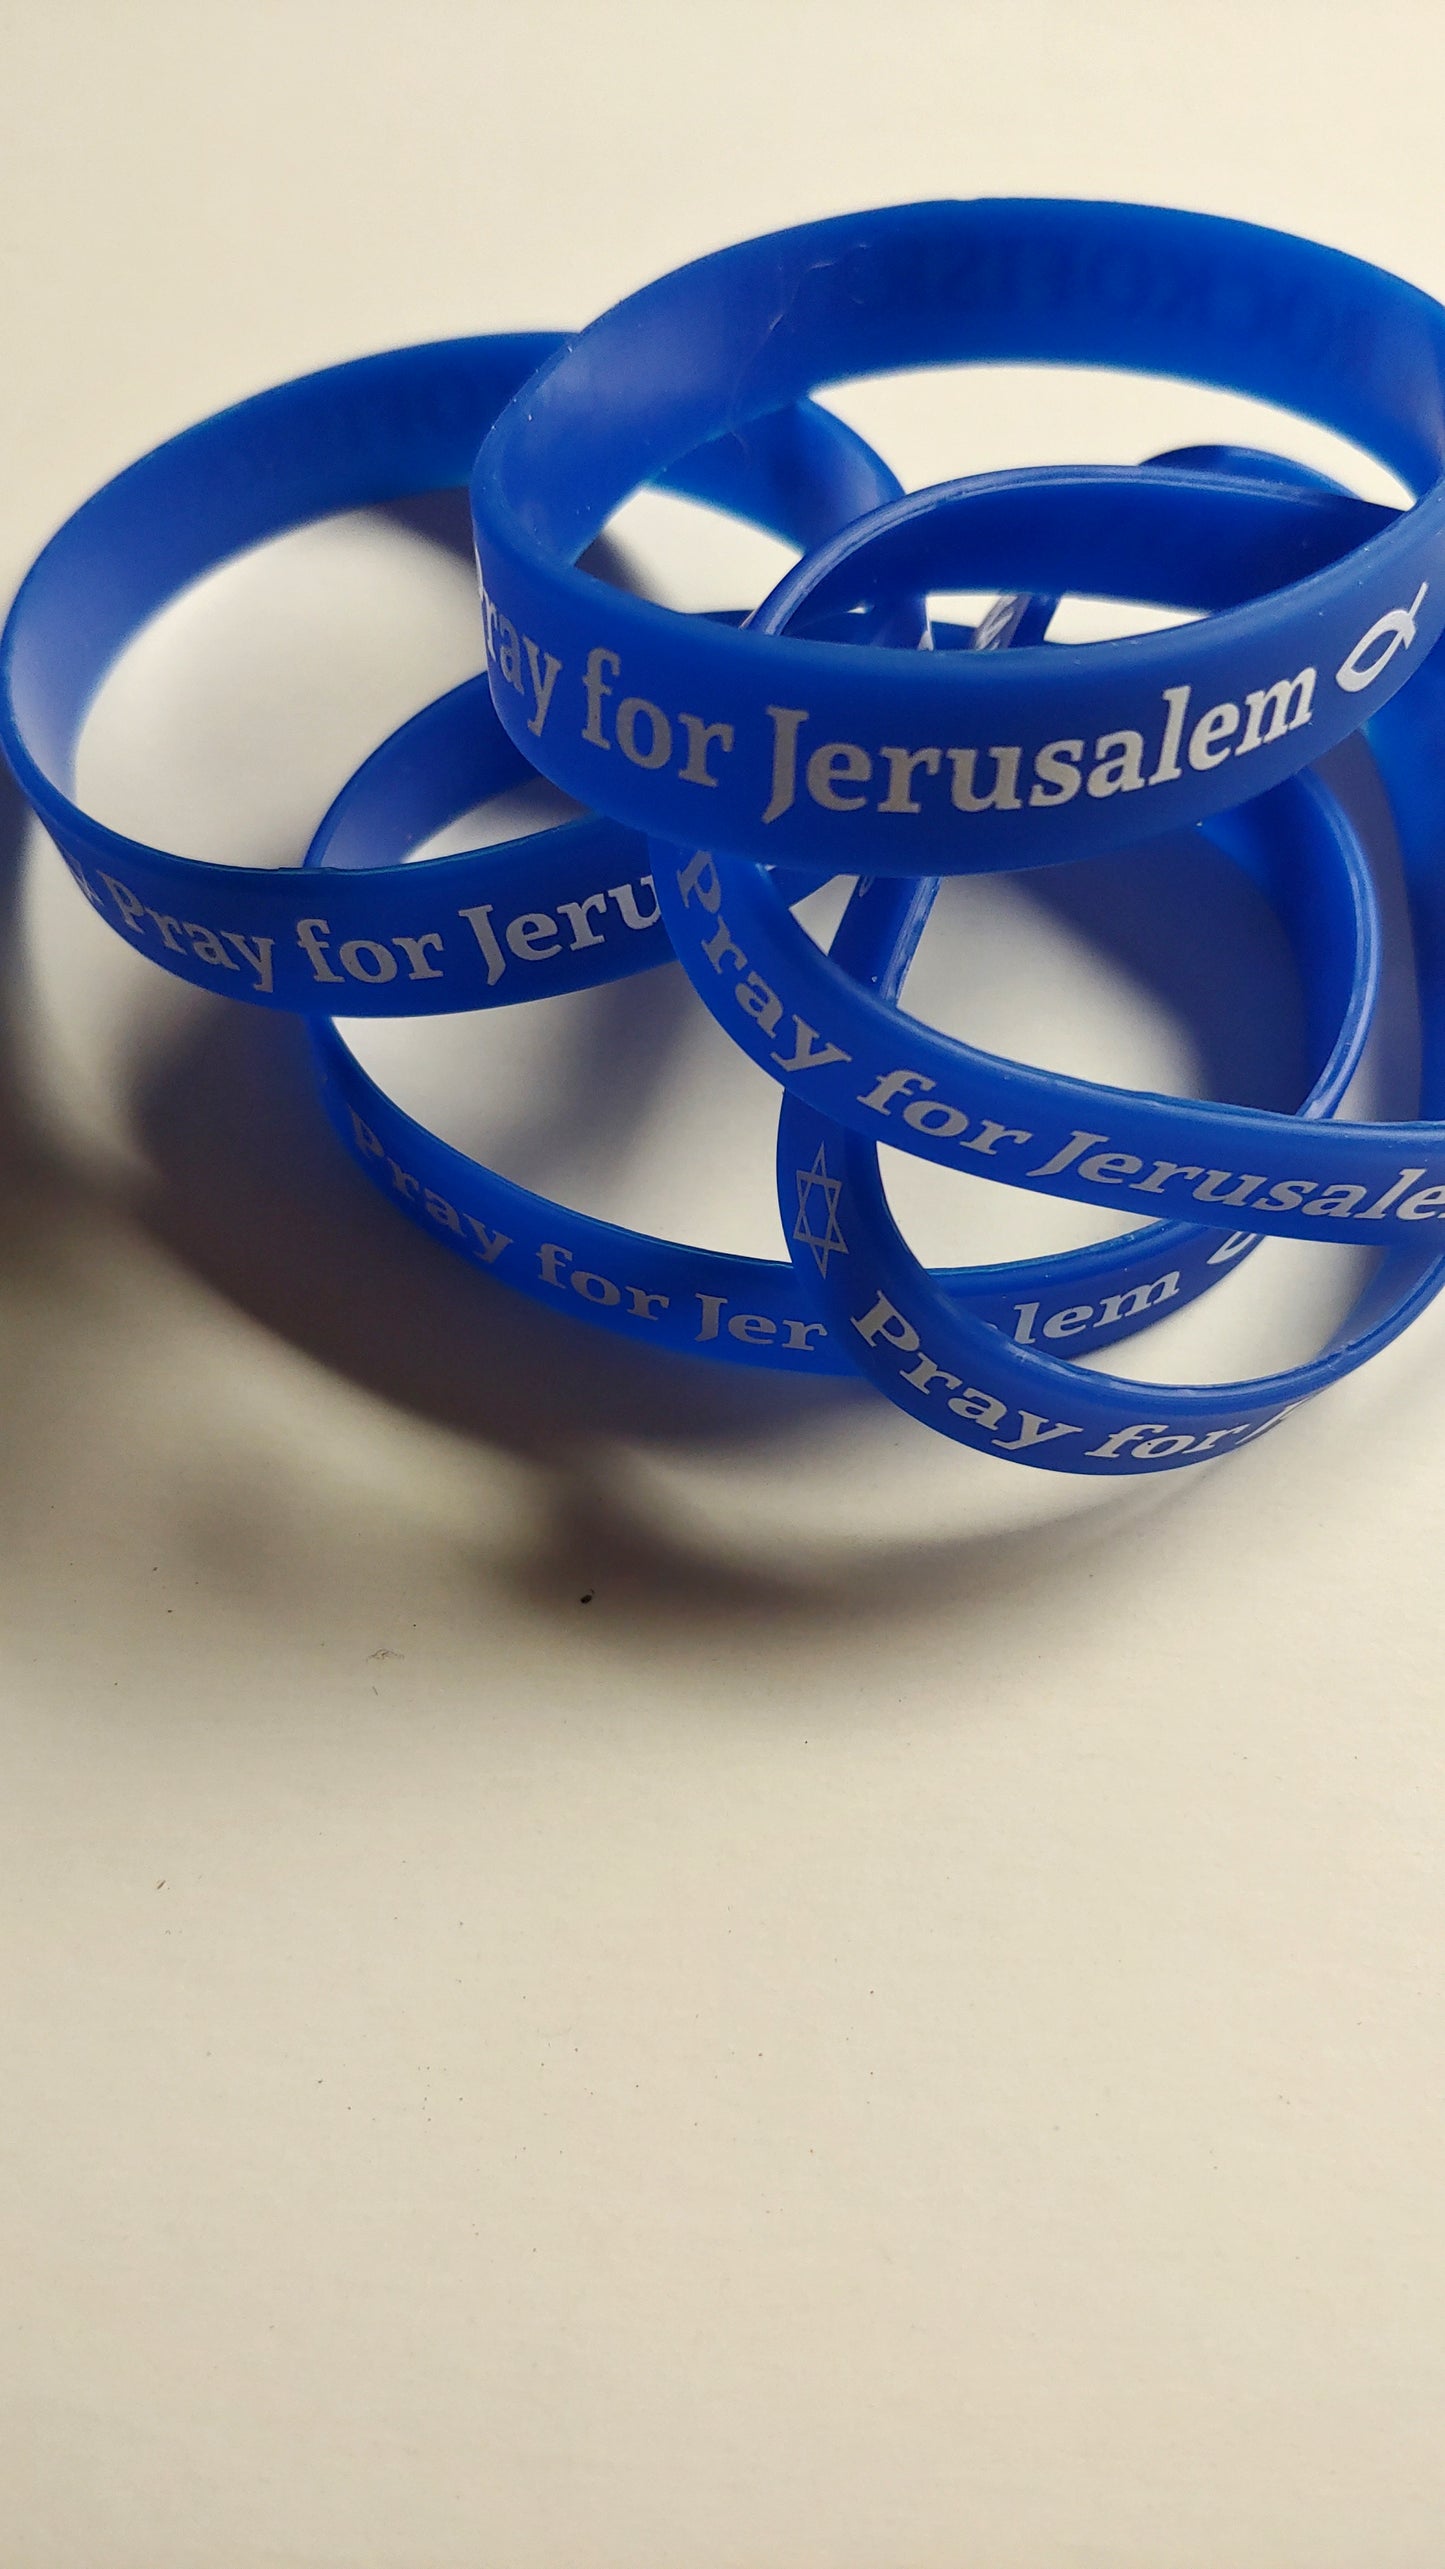 Pray for Jerusalem rubber wrist band